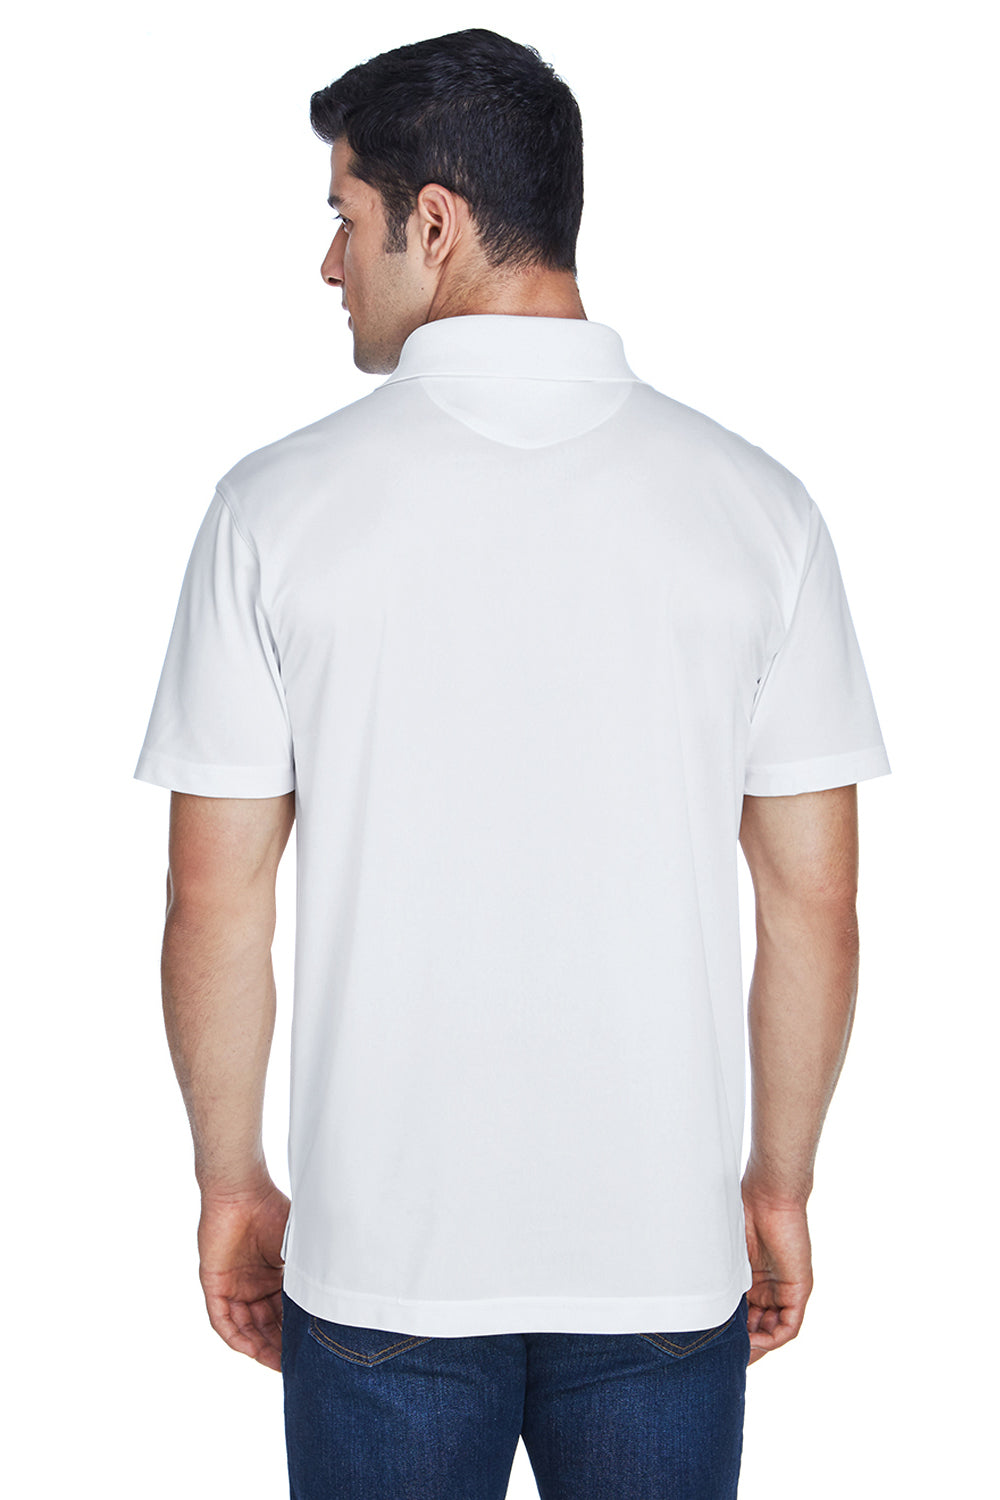 Harriton M315 Mens Polytech Moisture Wicking Short Sleeve Polo Shirt White Back